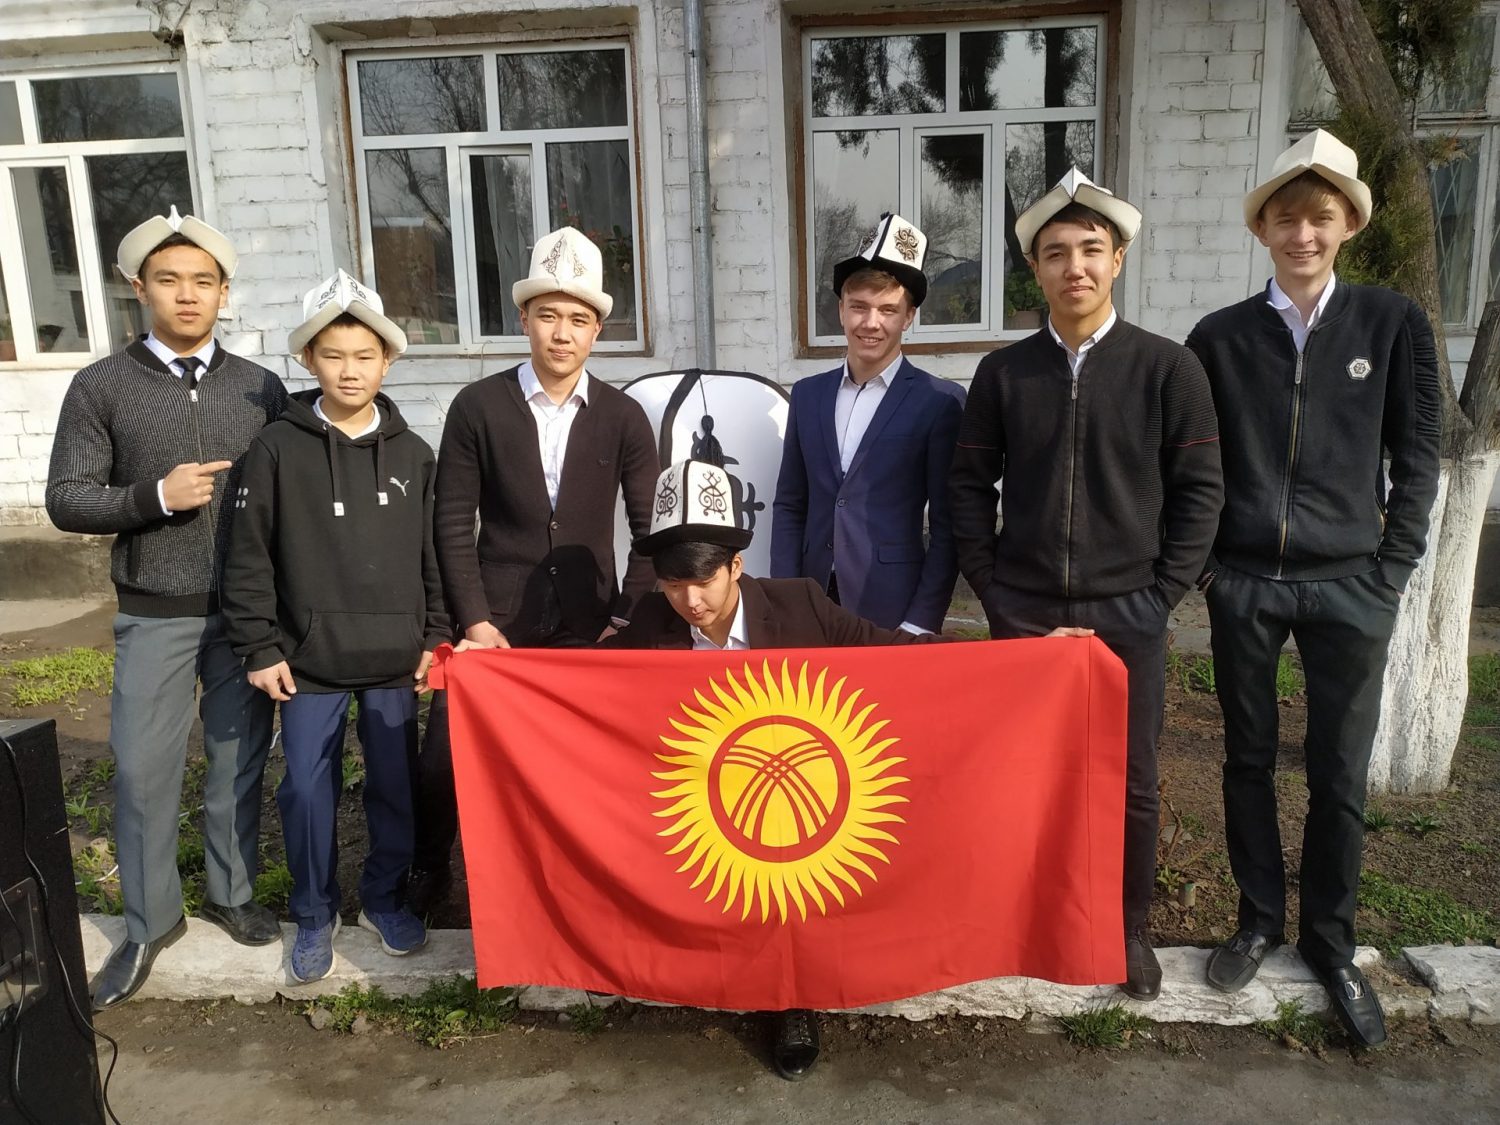 шапка киргиза фото